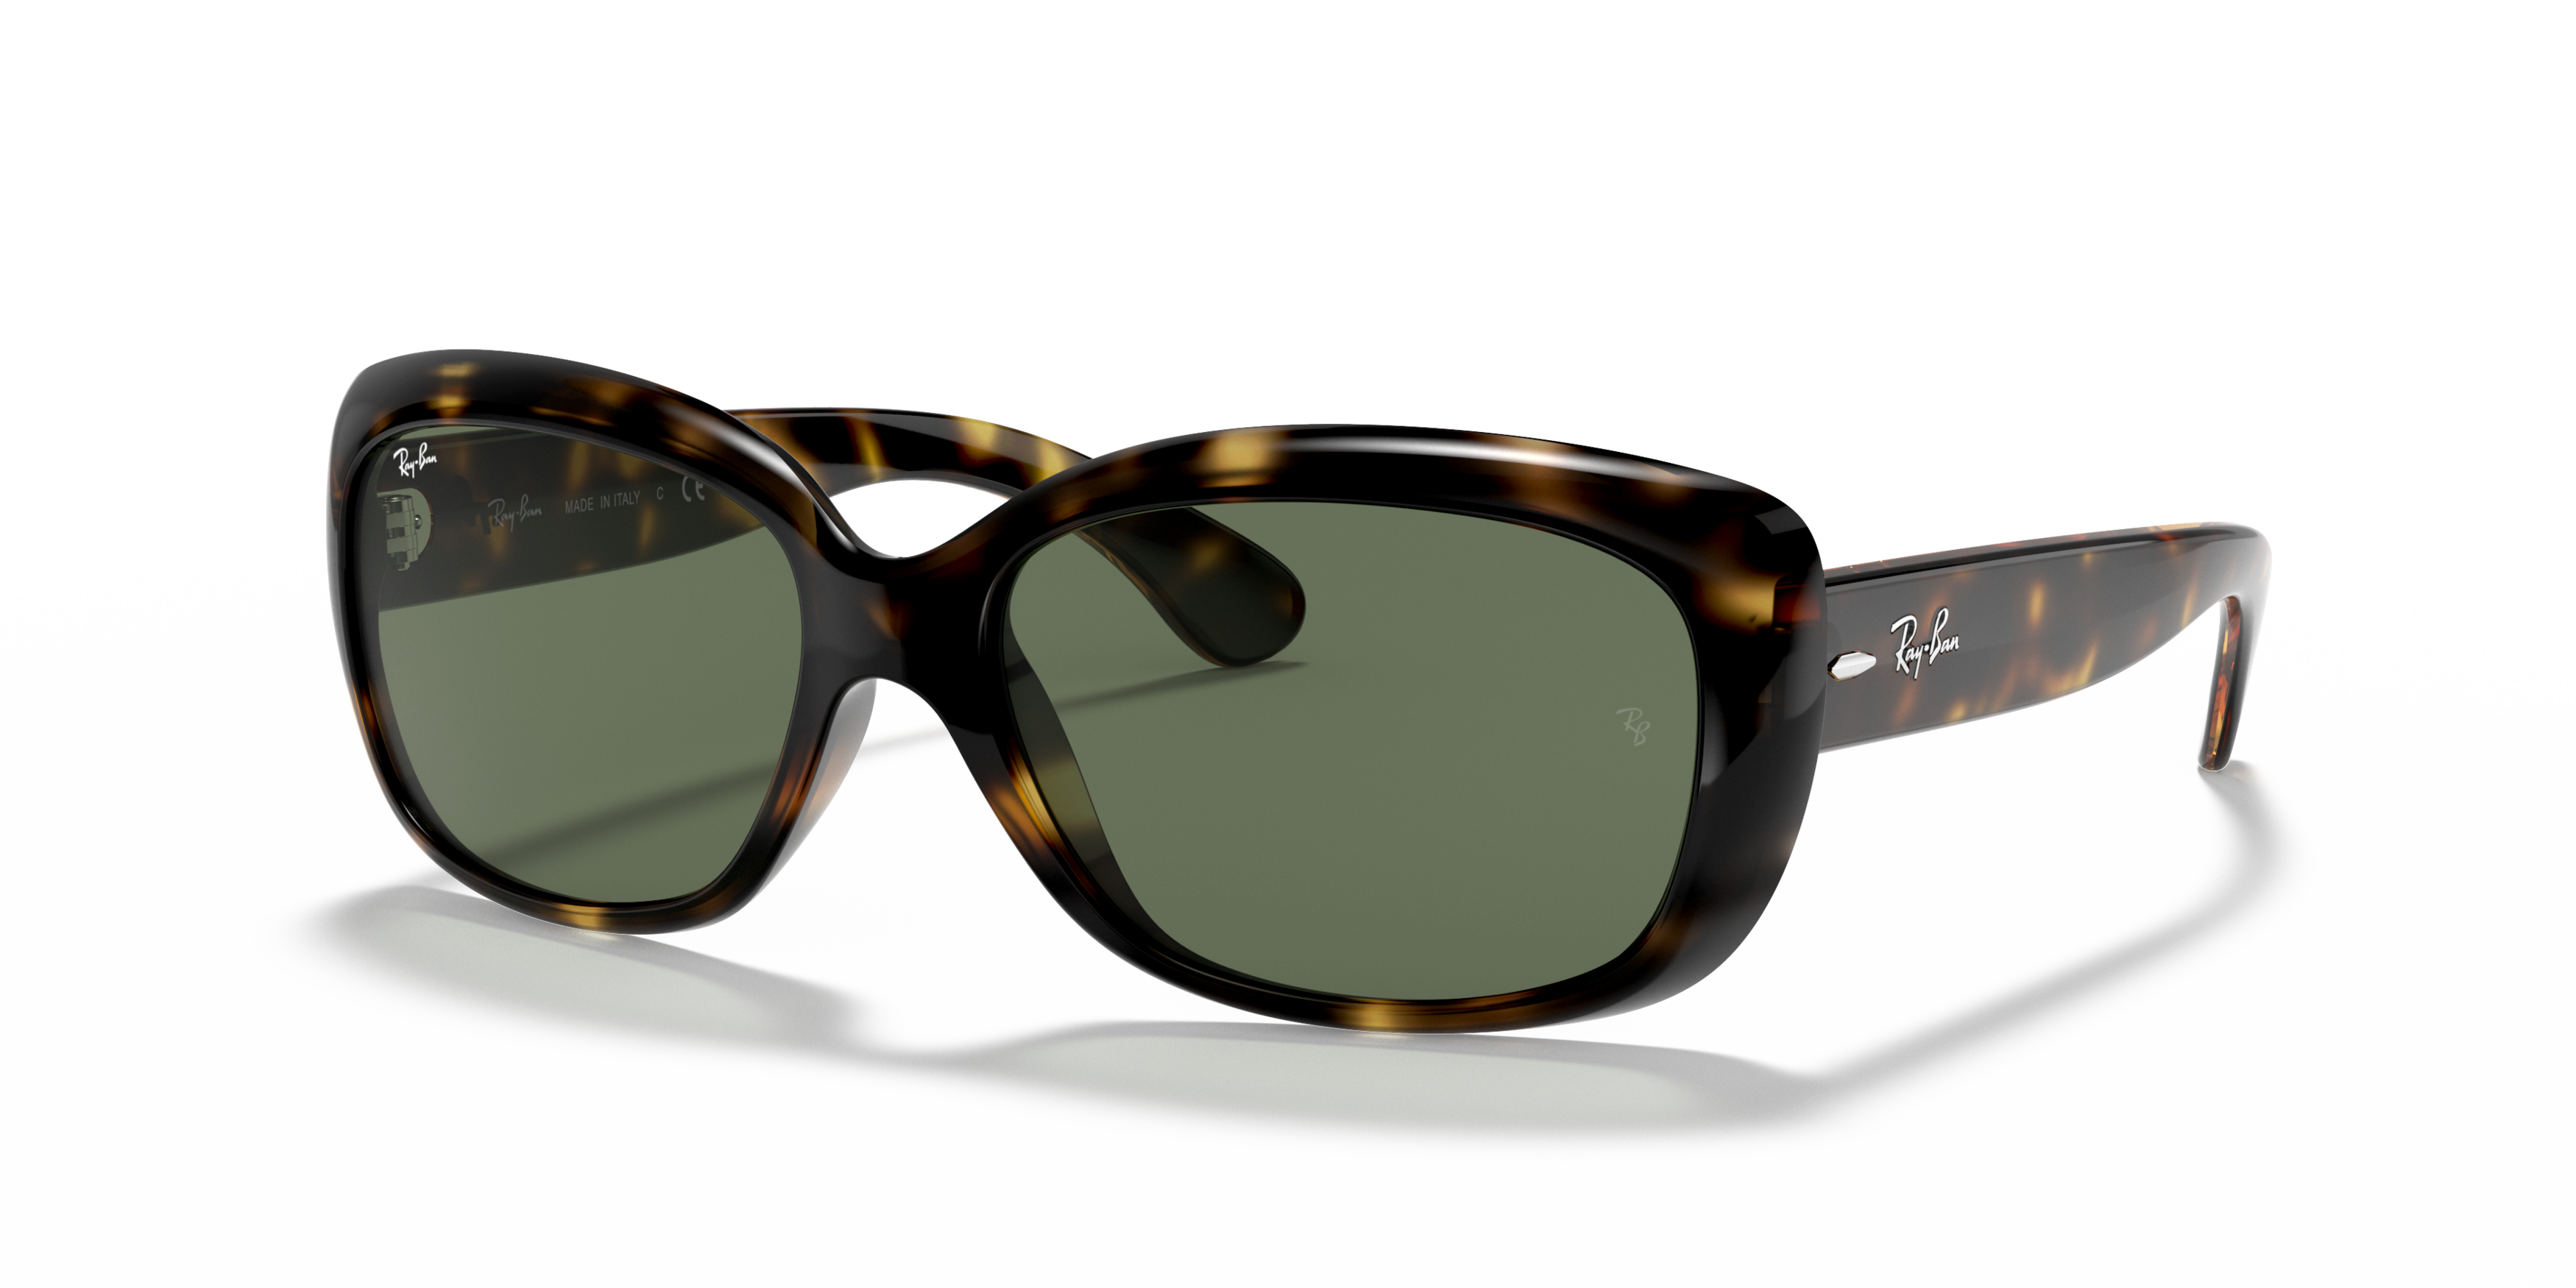 Angle_Left01 Ray-Ban Jackie Ohh RB 4101 (710) Sunglasses Green / Tortoise Shell